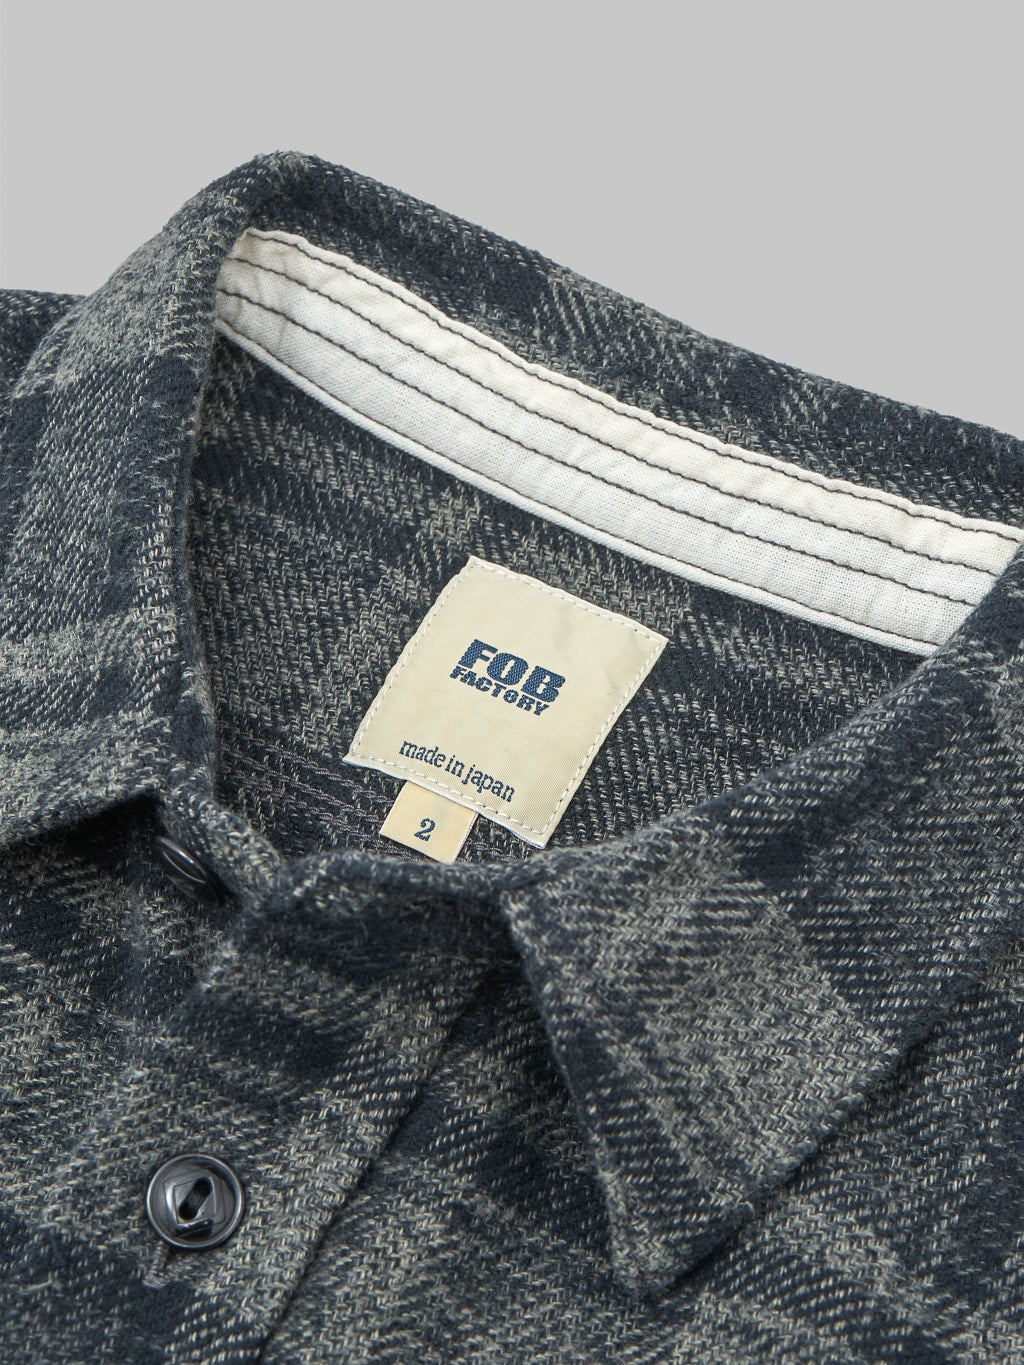 Fob Factory F3497 Nel Check Work flannel Shirt grey collar